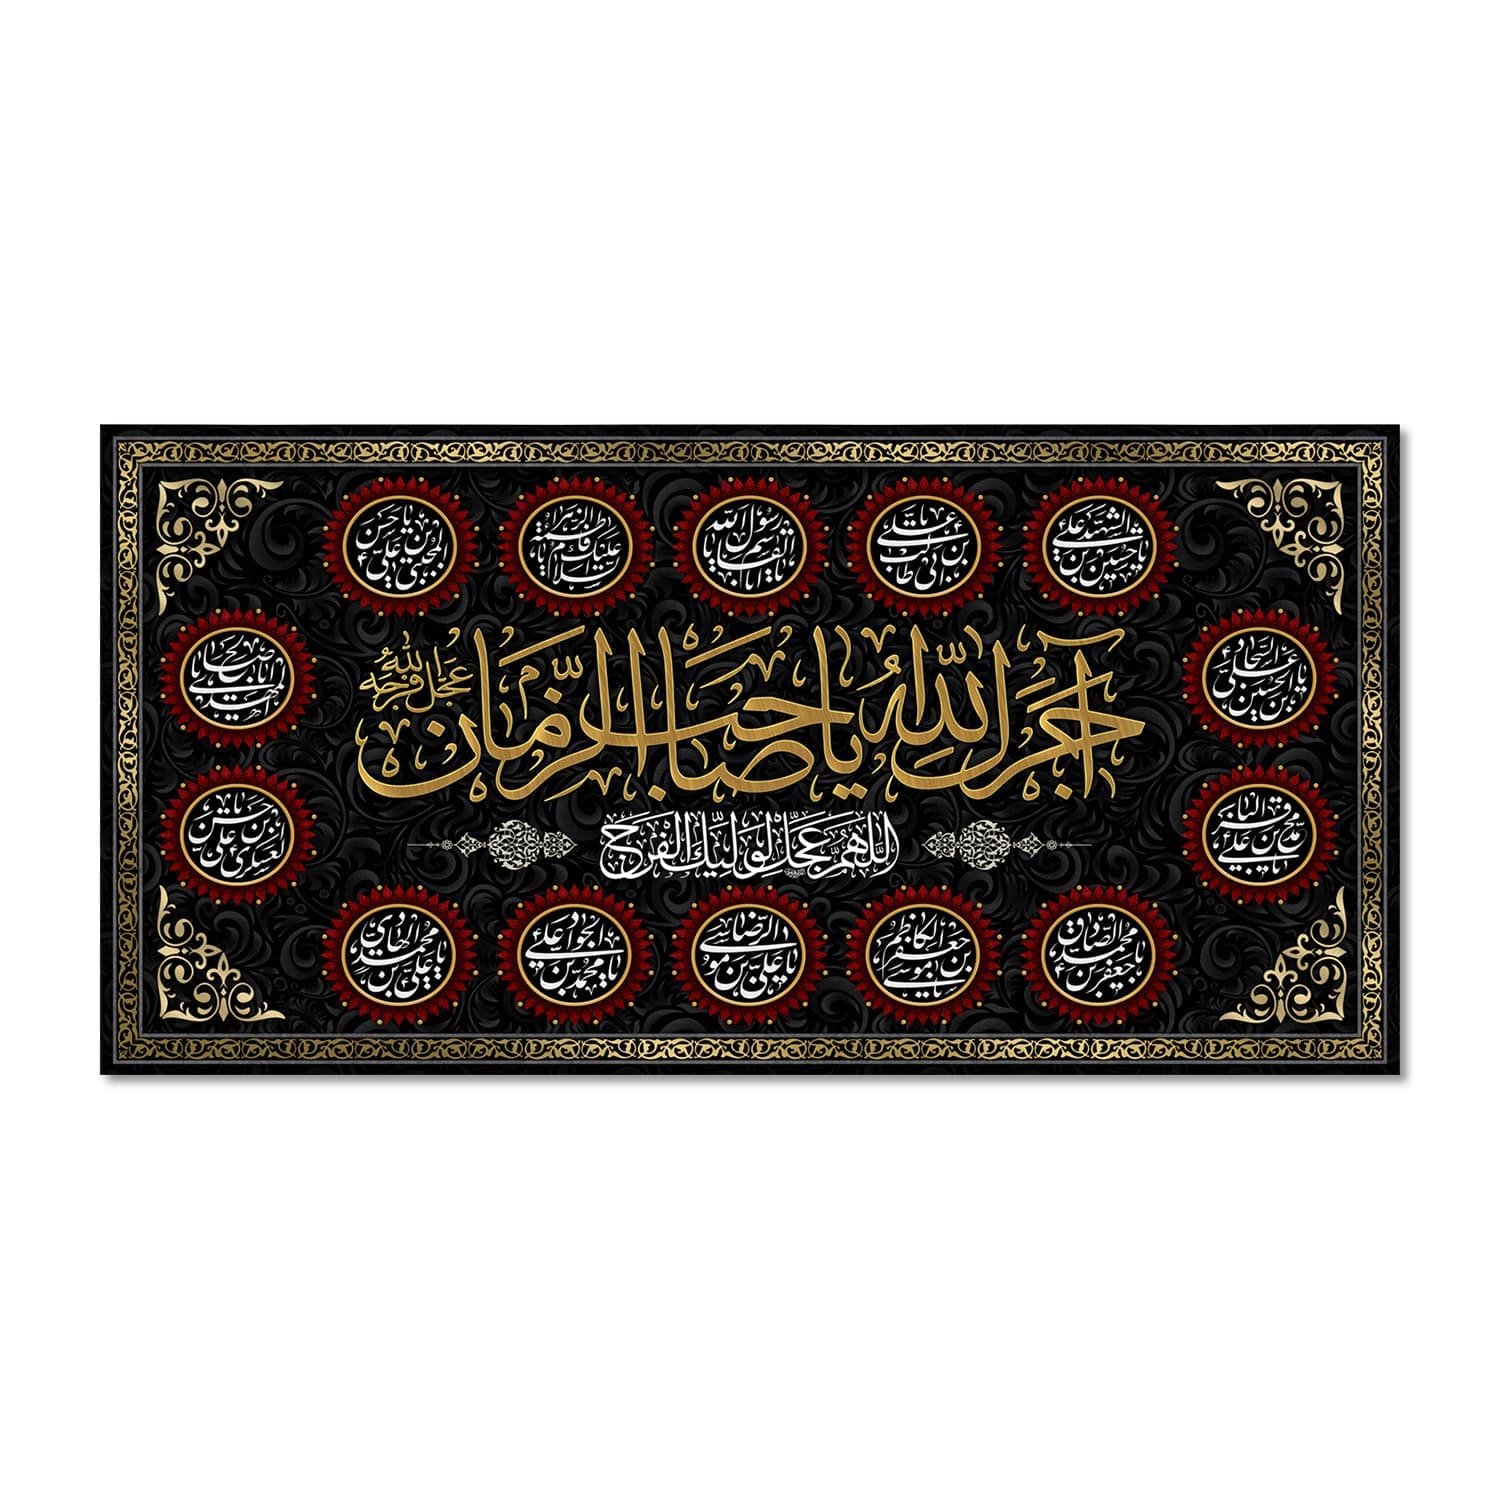 پرچم مدل کتیبه مخملی آجرک الله یا صاحب الزمان کد 5000109-14070